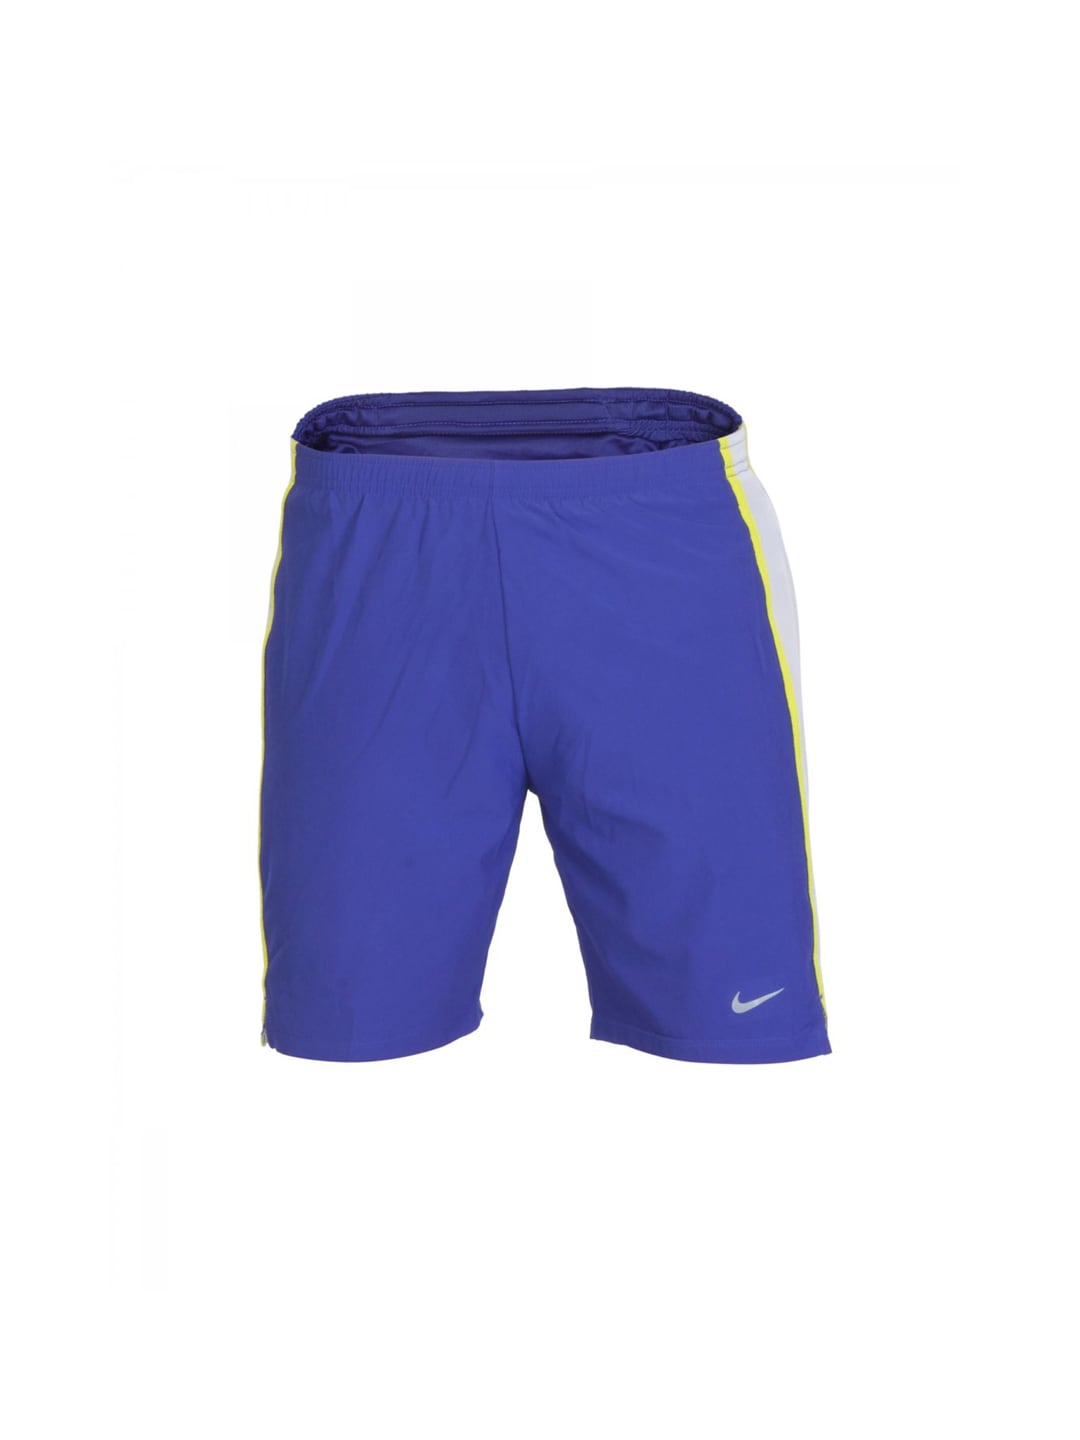 Nike Boys Running Blue Shorts